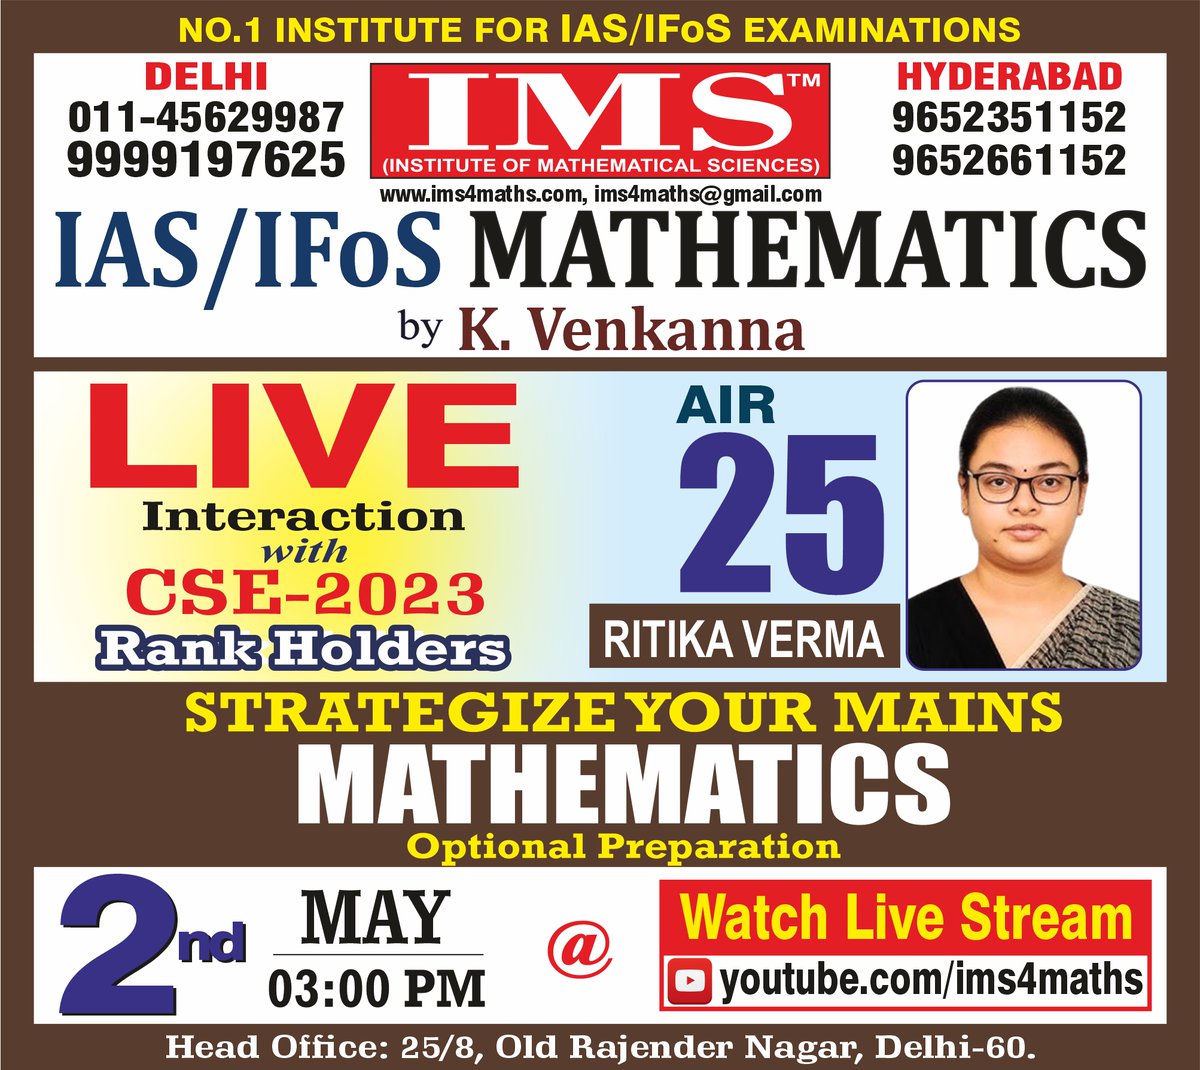 🌐 Explore more on our website:- ims4maths.com/upsc-final-res…
📍Visit our head office:👉  25/8, Old Rajender Nagar Market, Delhi-110060
For inquiries: 📞 011-45629987 or wa.me/9999197625
📍 Map:- maps.app.goo.gl/myD36h8BjC8PRR…

#UPSC #CSE2023 #SuccessStory #MathematicsMatters #IMS